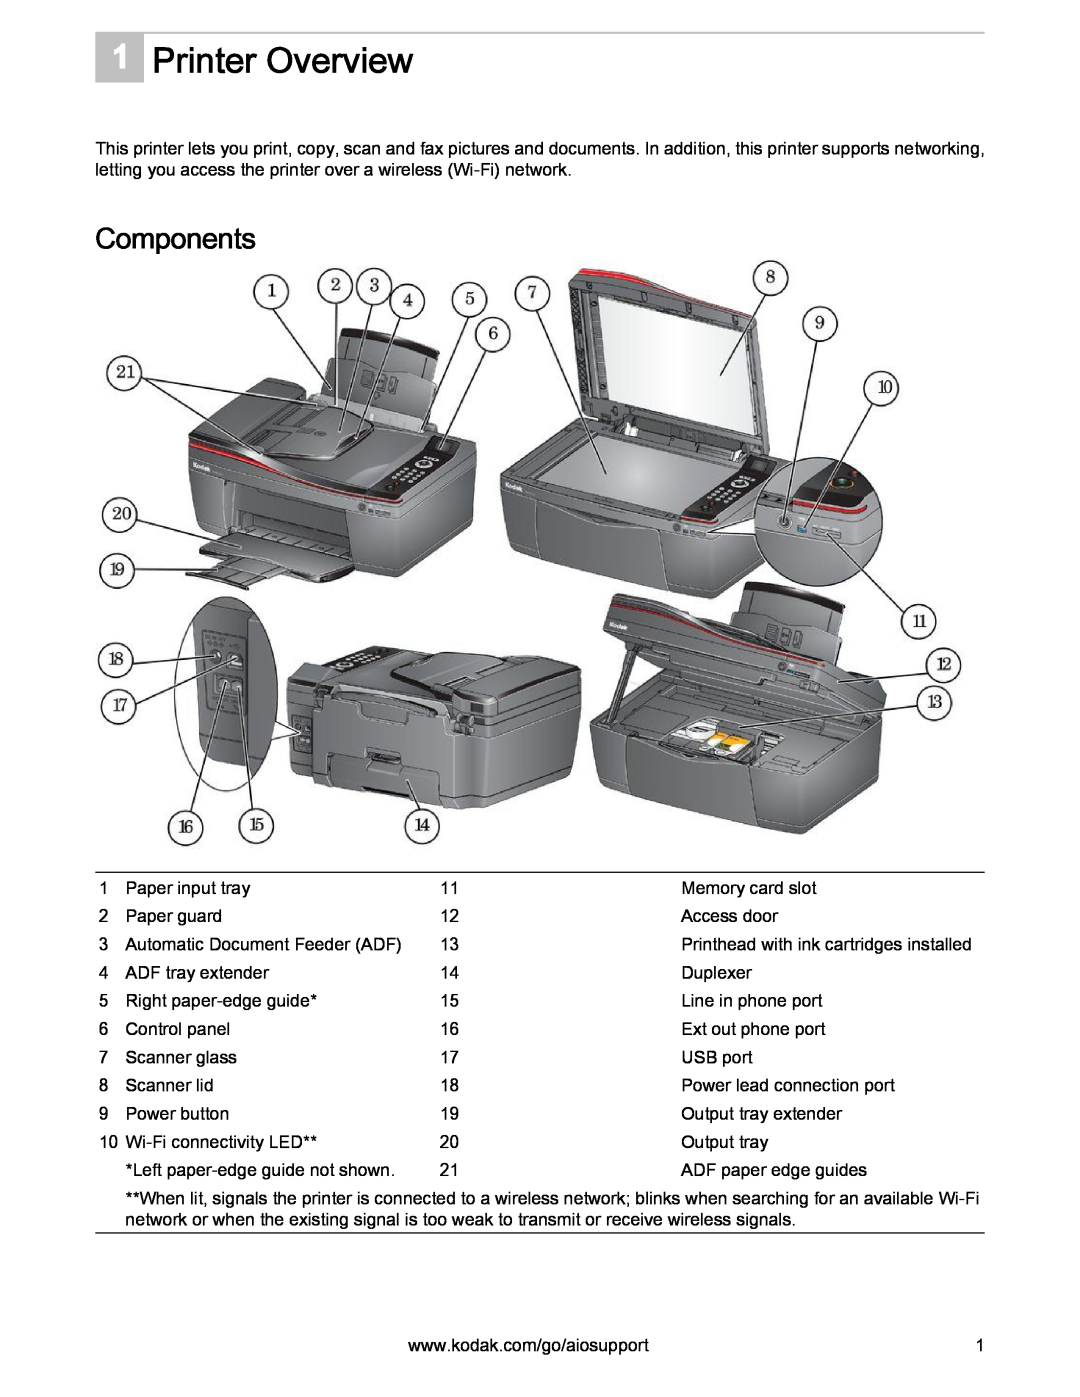 Kodak 2.2 manual Printer Overview, Components 